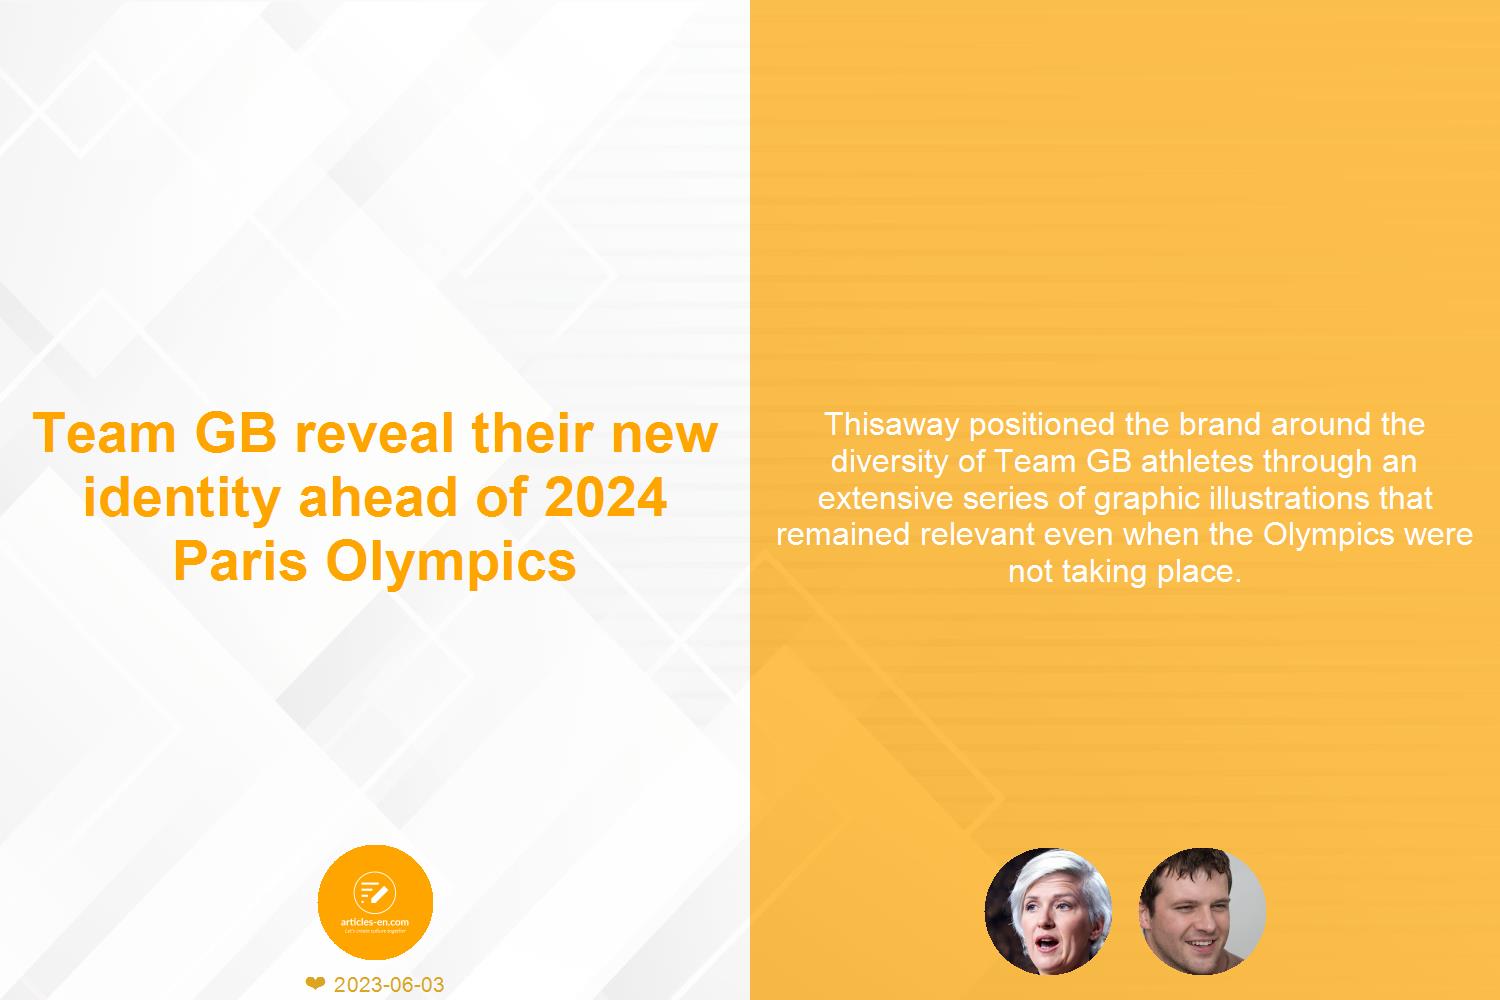 Team GB reveal their new identity ahead of 2024 Paris Olympics